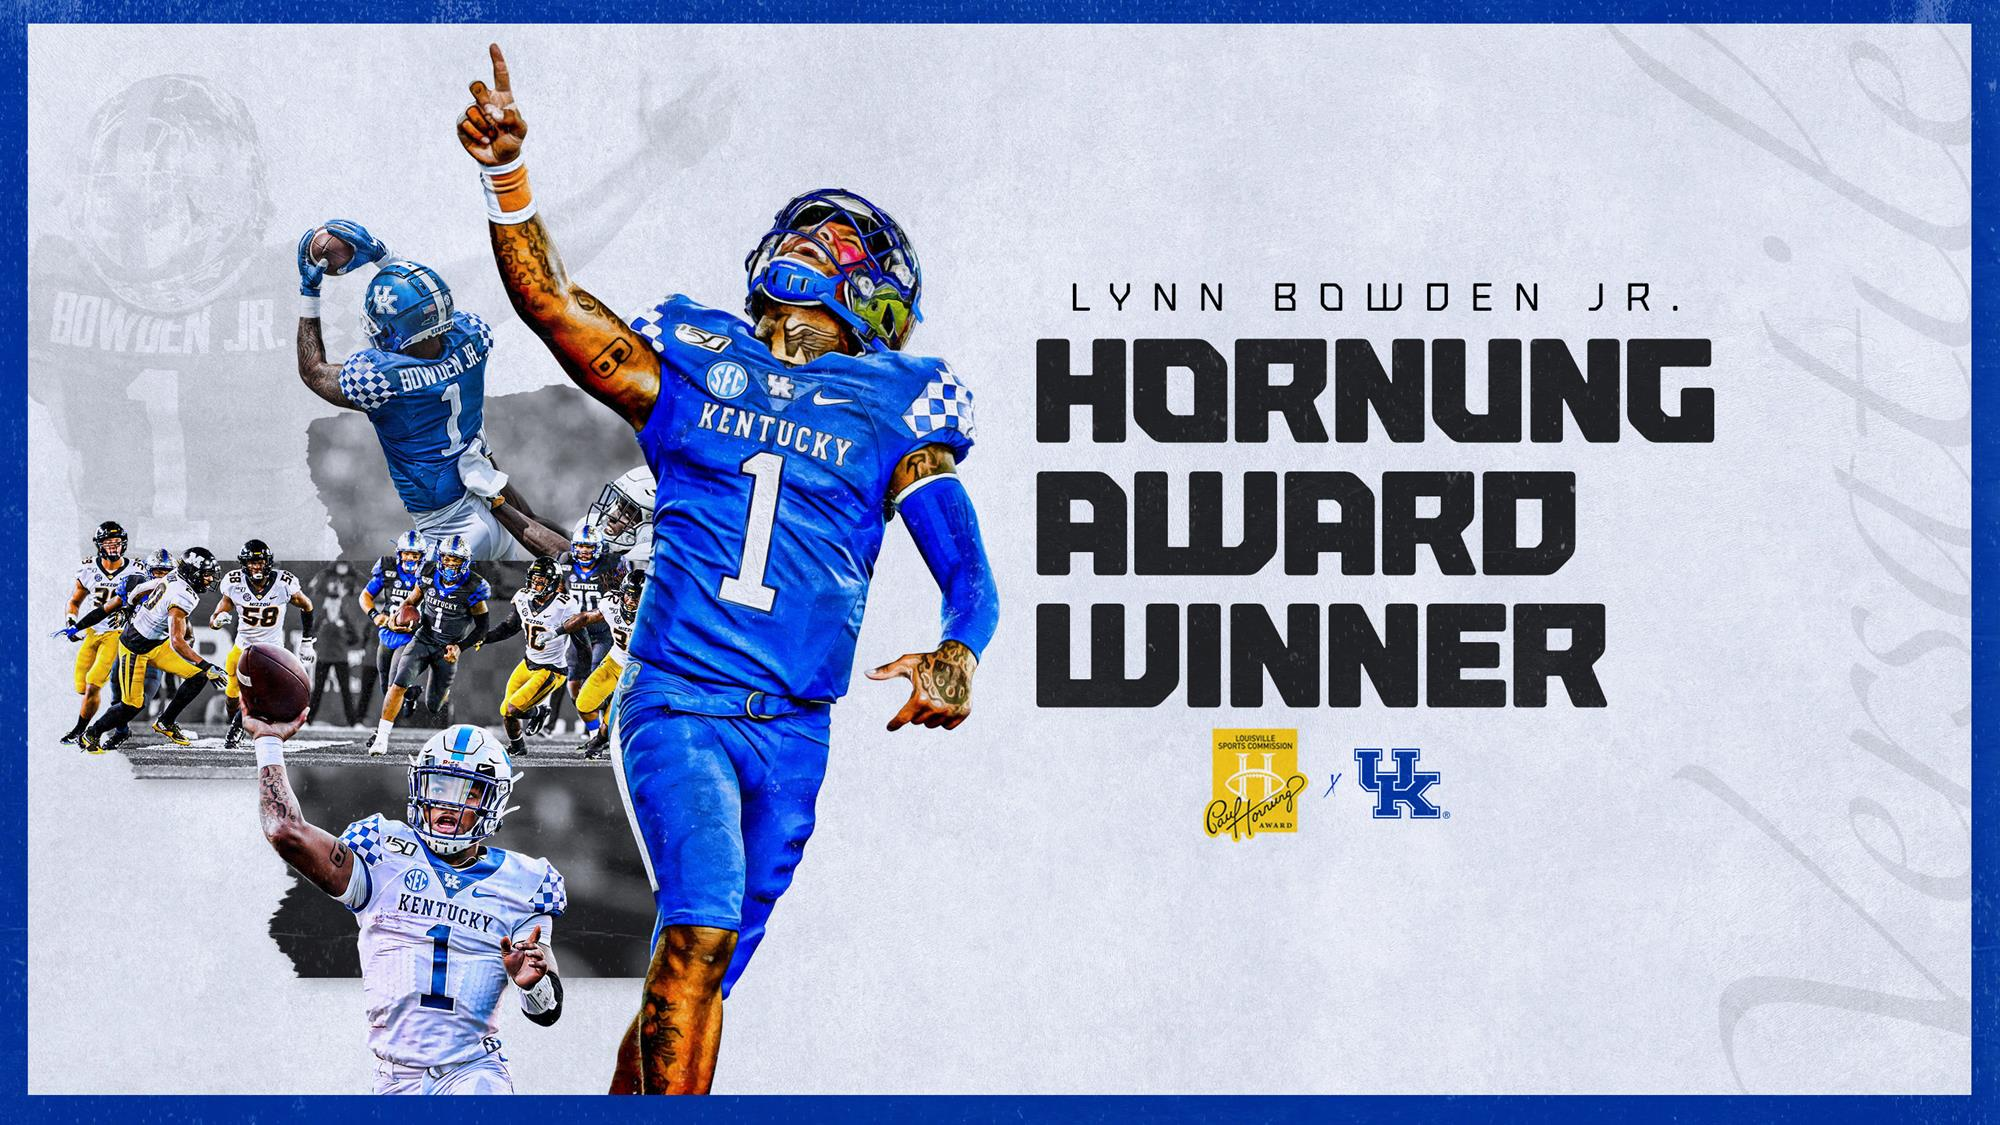 Lynn Bowden Jr. Named 2019 Paul Hornung Winner